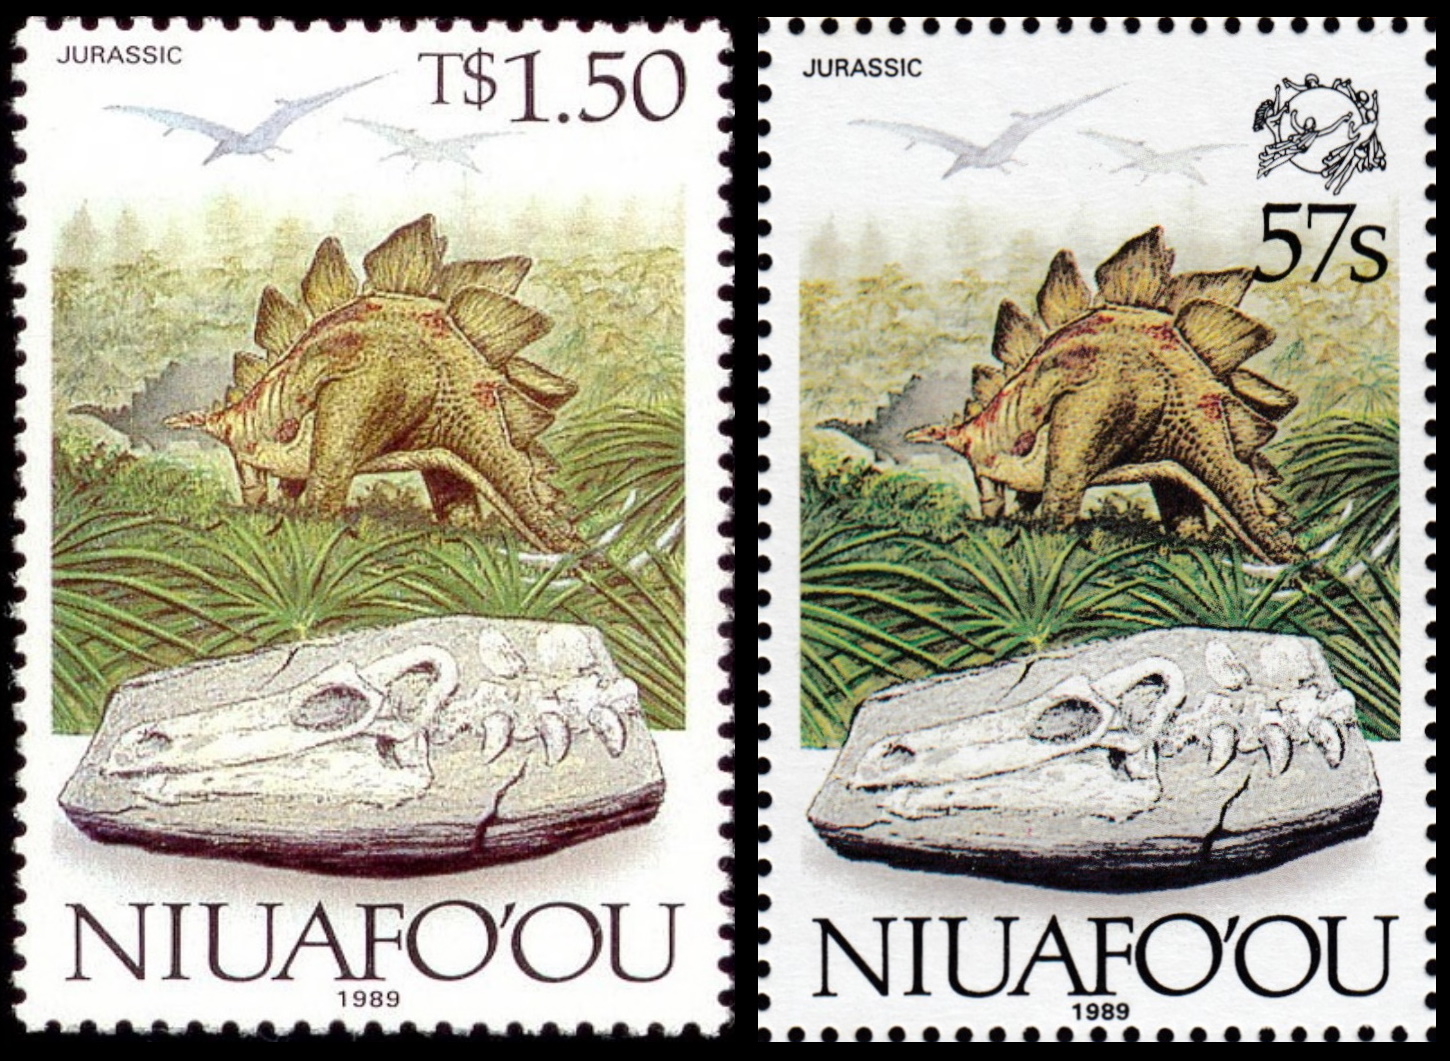 Stegosaurus on stamps of Niuafo’ou 1989